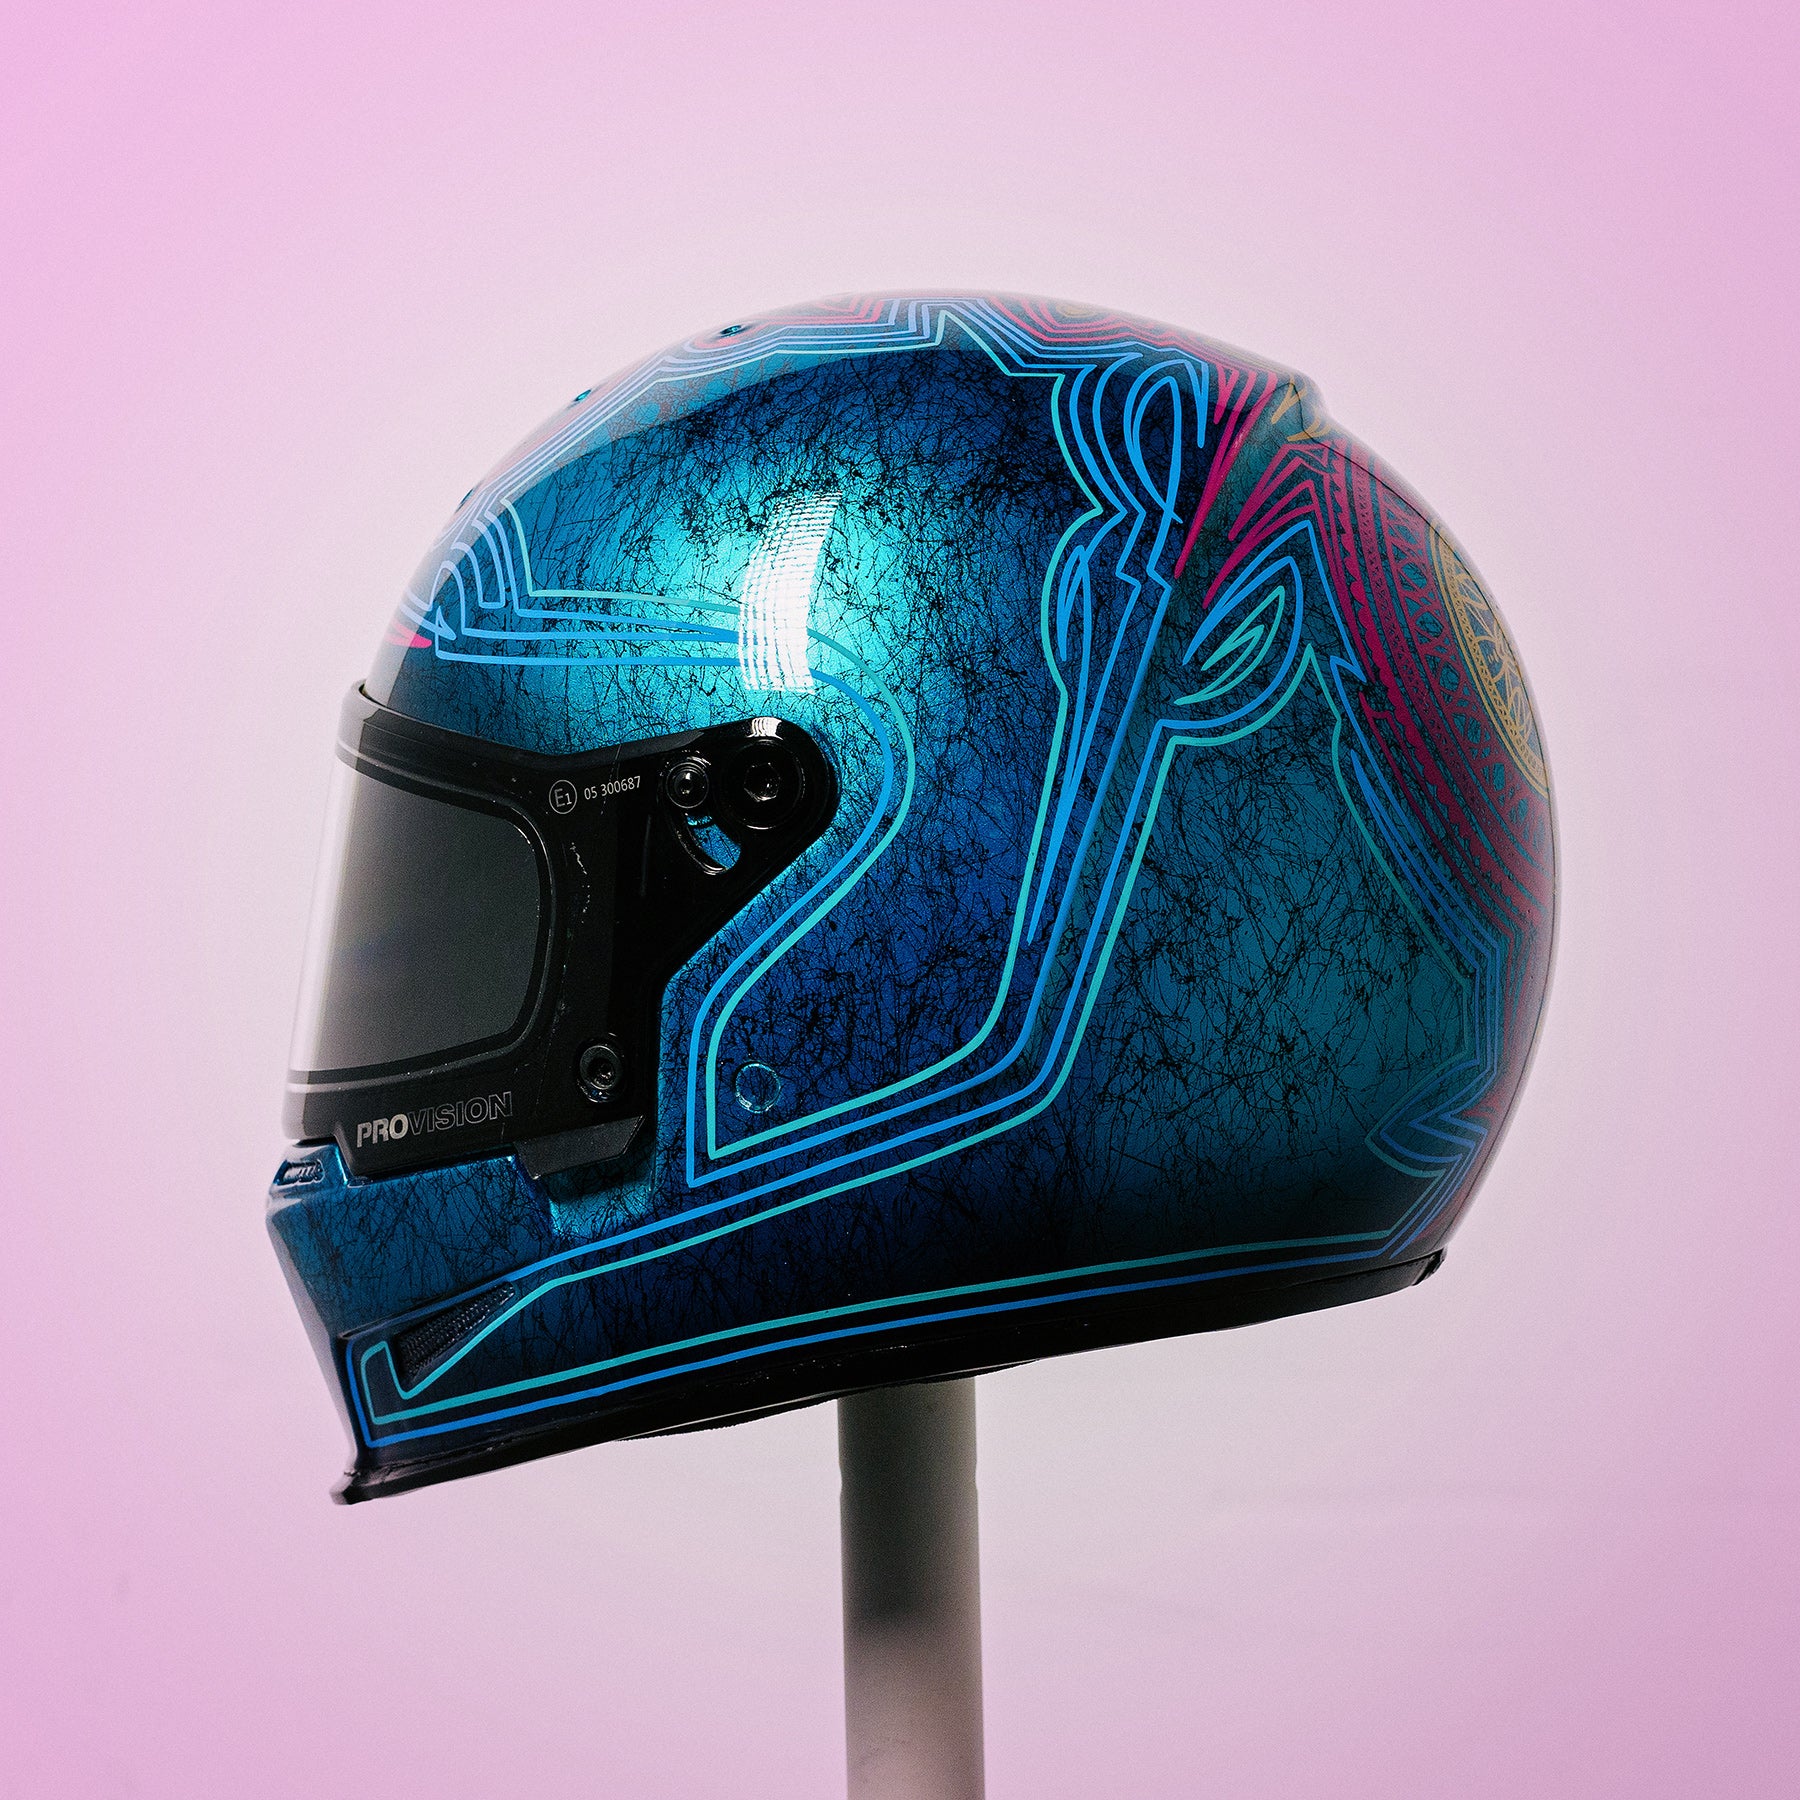 Trippy Ten helmet art show Pittsburgh Glory Daze motorcycle show Bell Helmets Taylor Schultz Designz